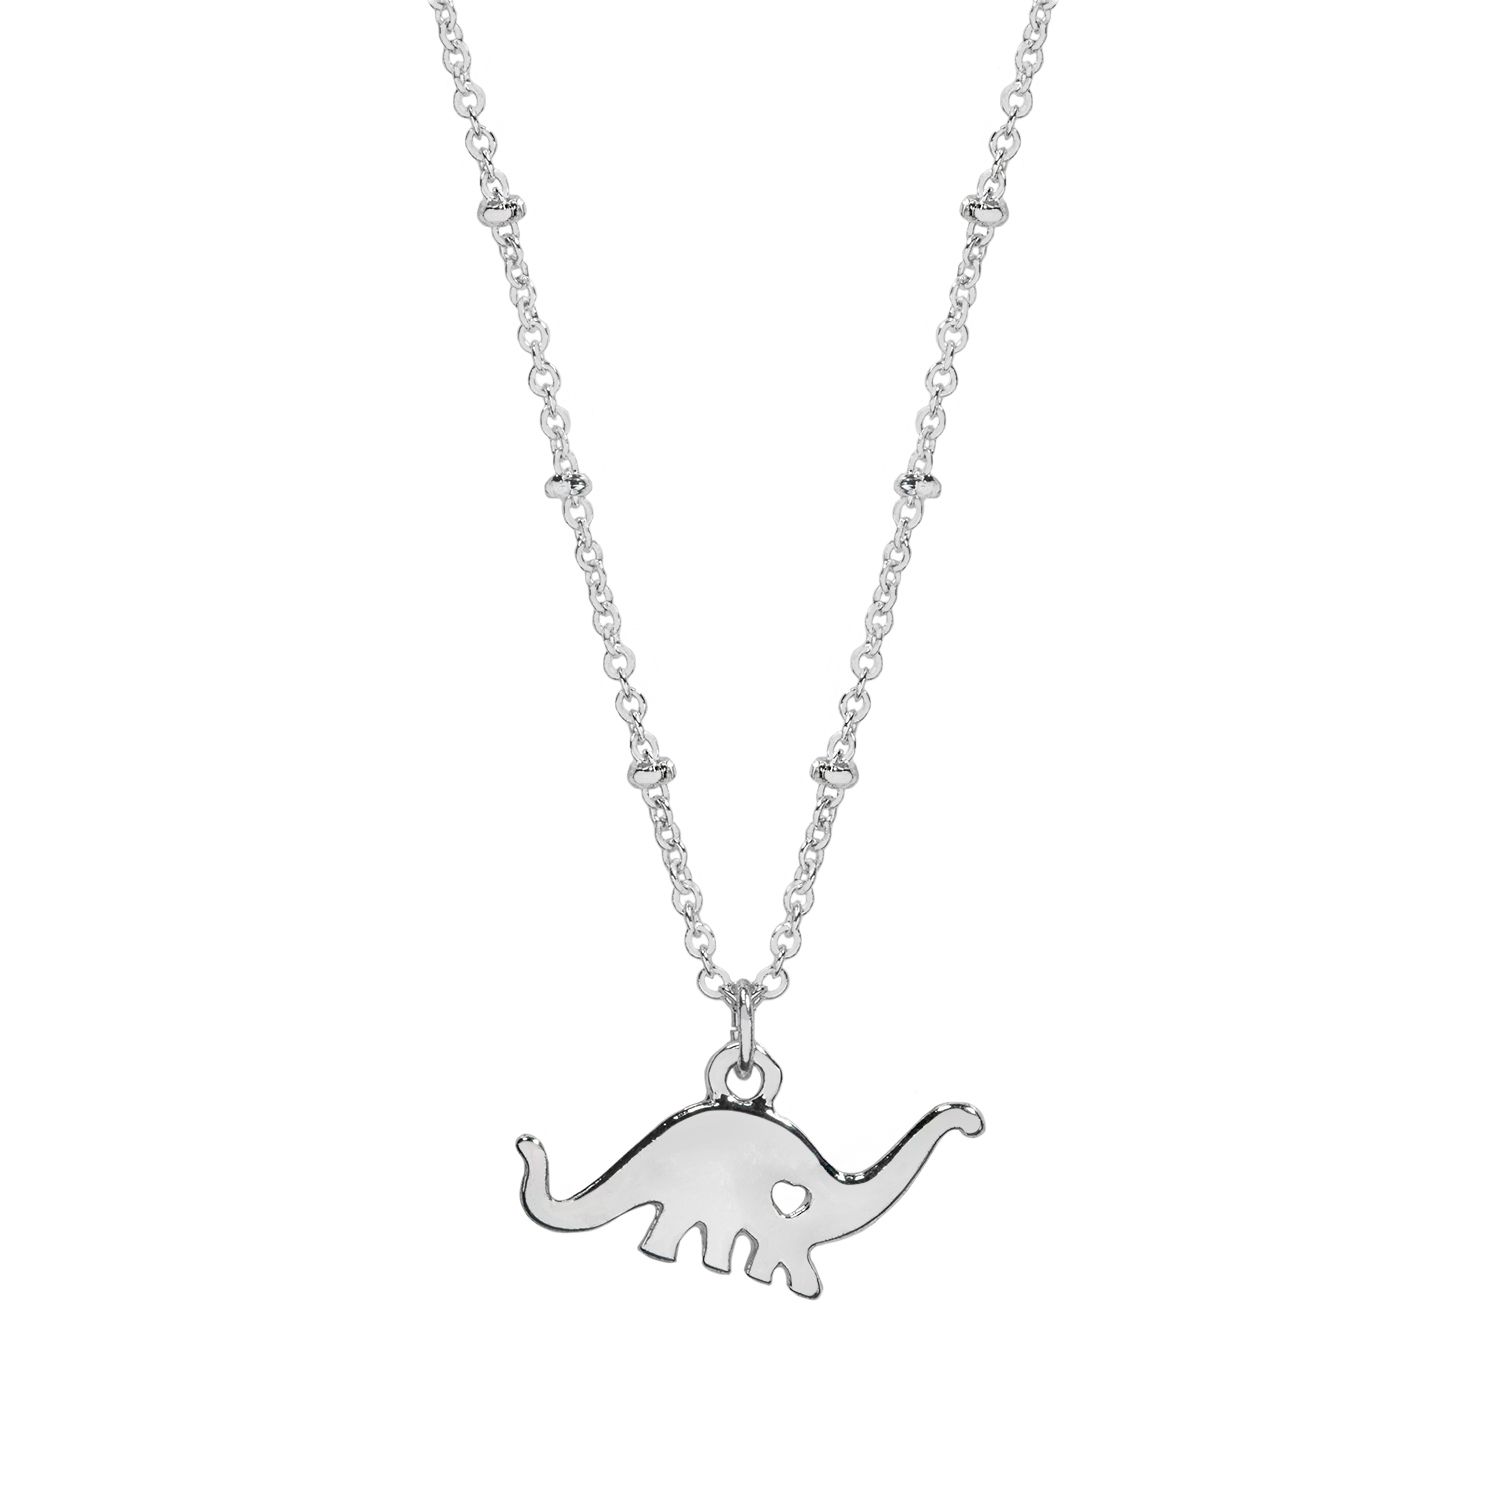 Image for LC Lauren Conrad Dinosaur Pendant Necklace at Kohl's.